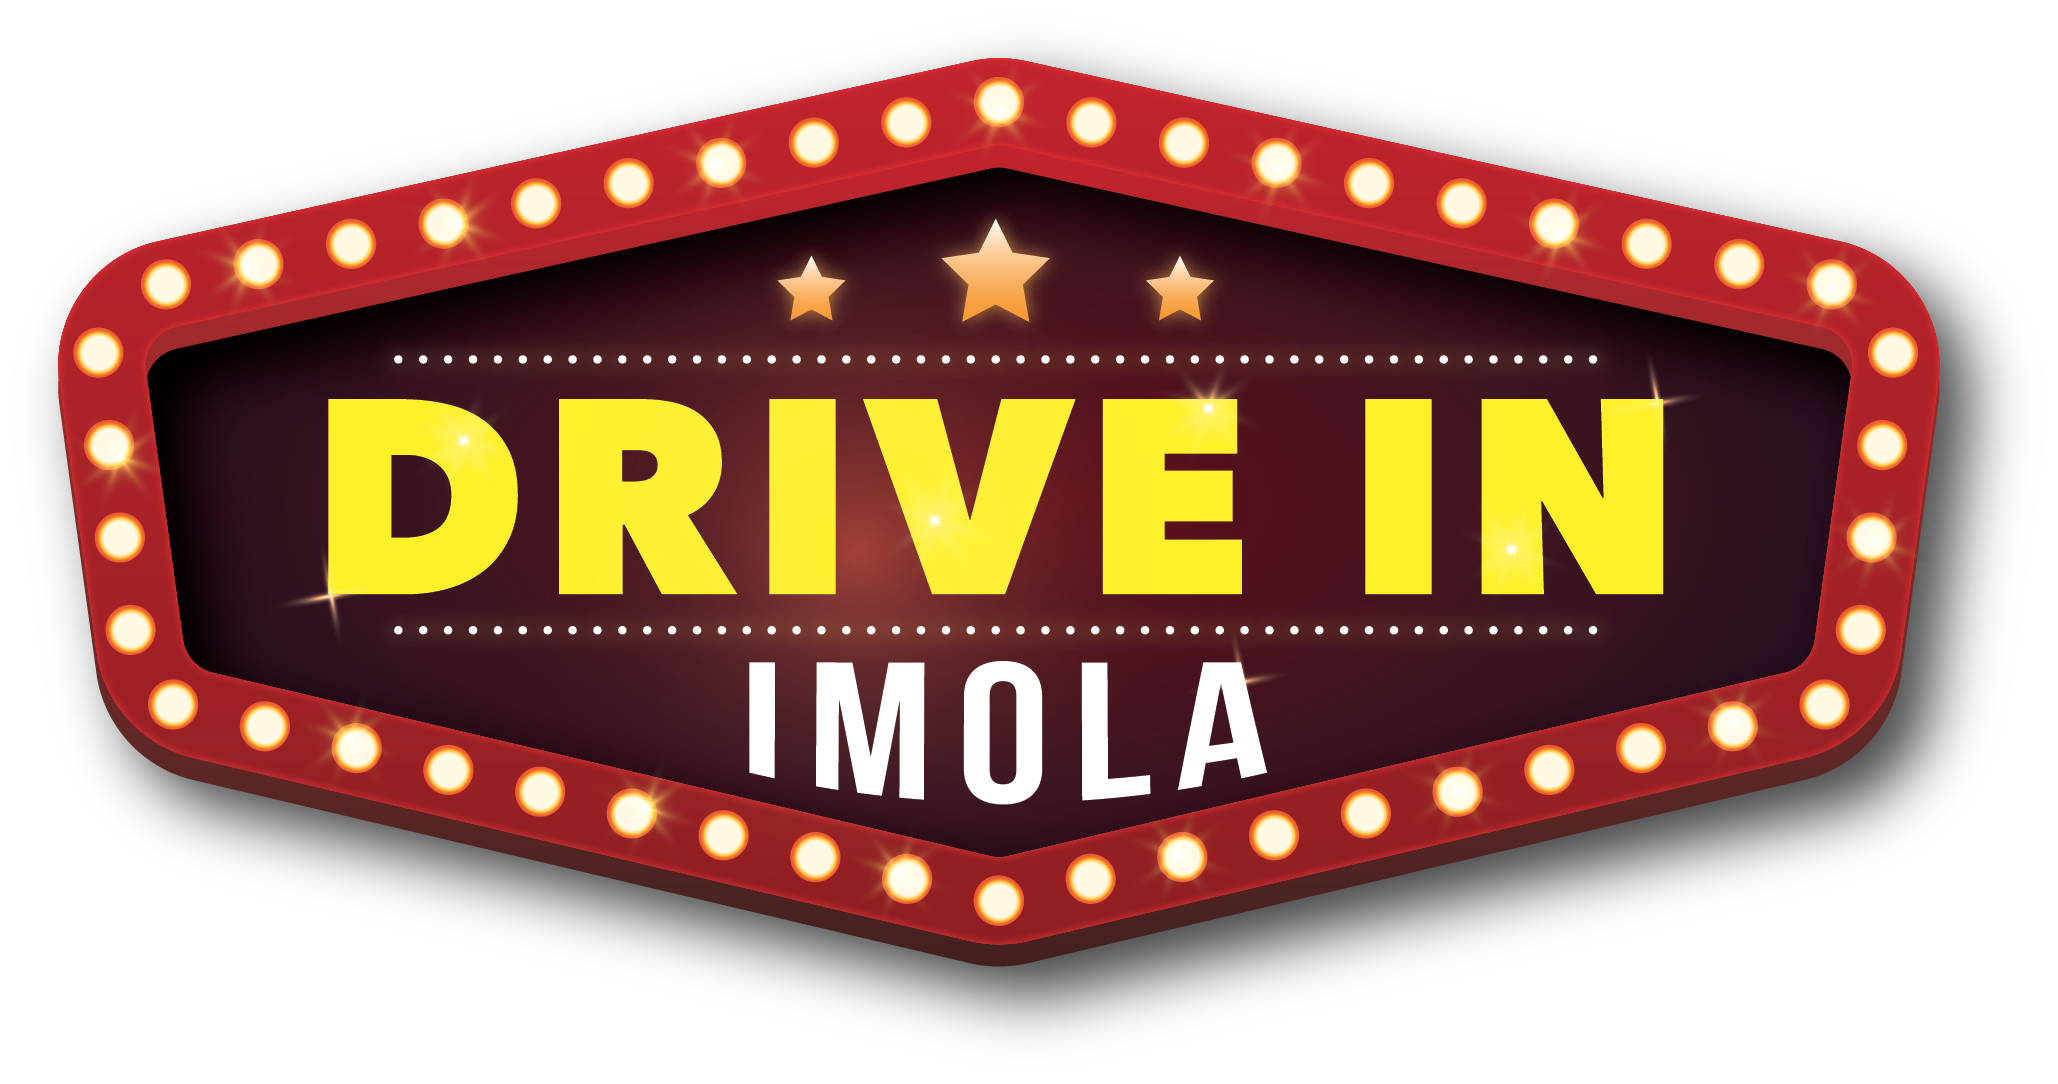 Drive-In Imola